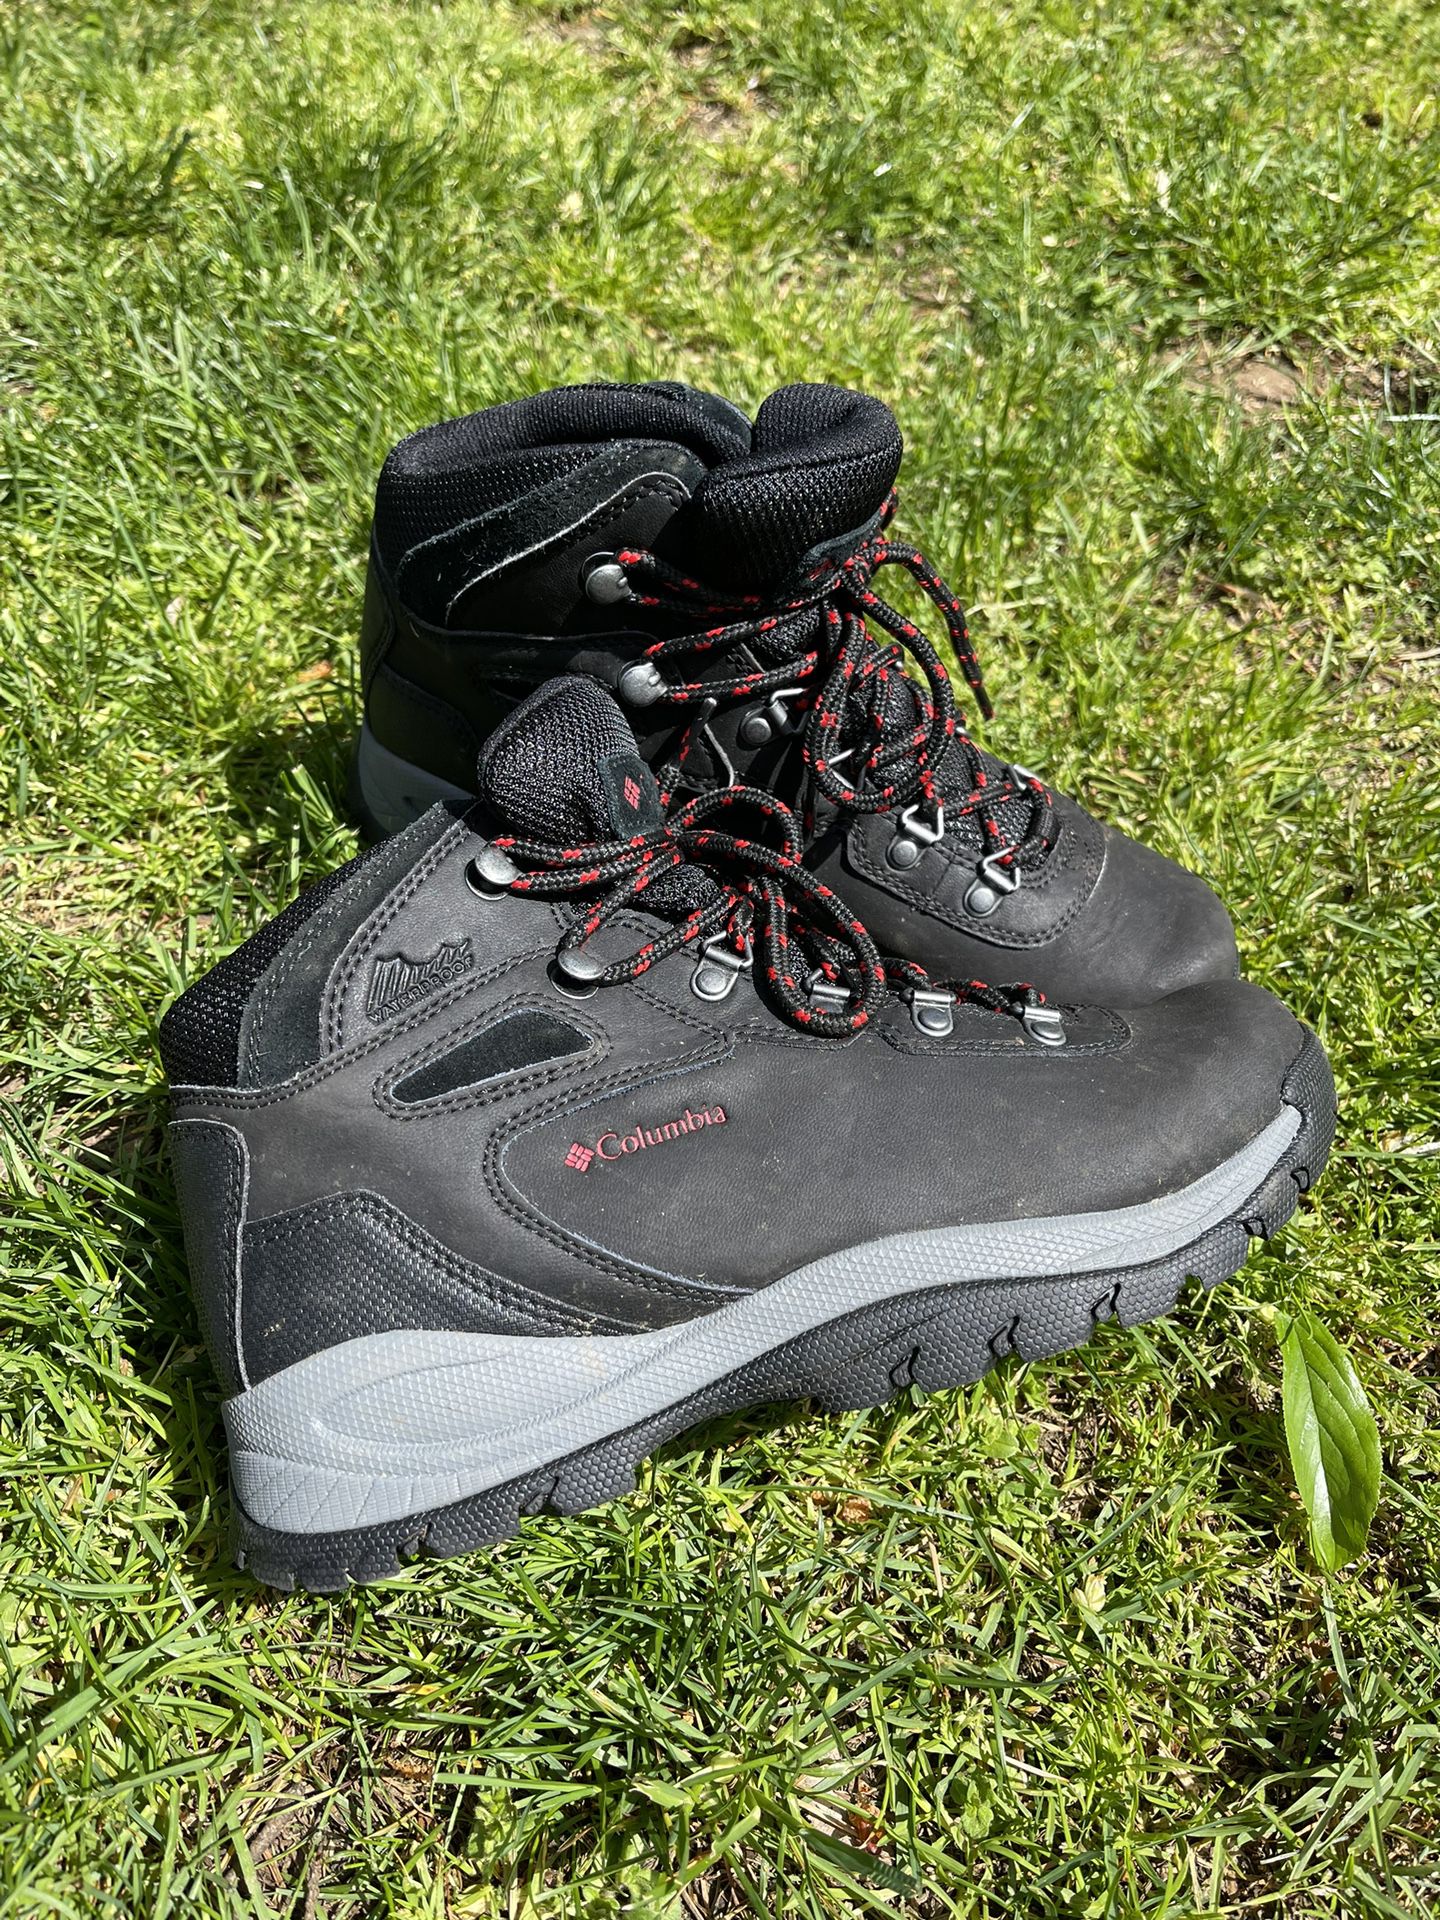 Columbia Hiking Boots 